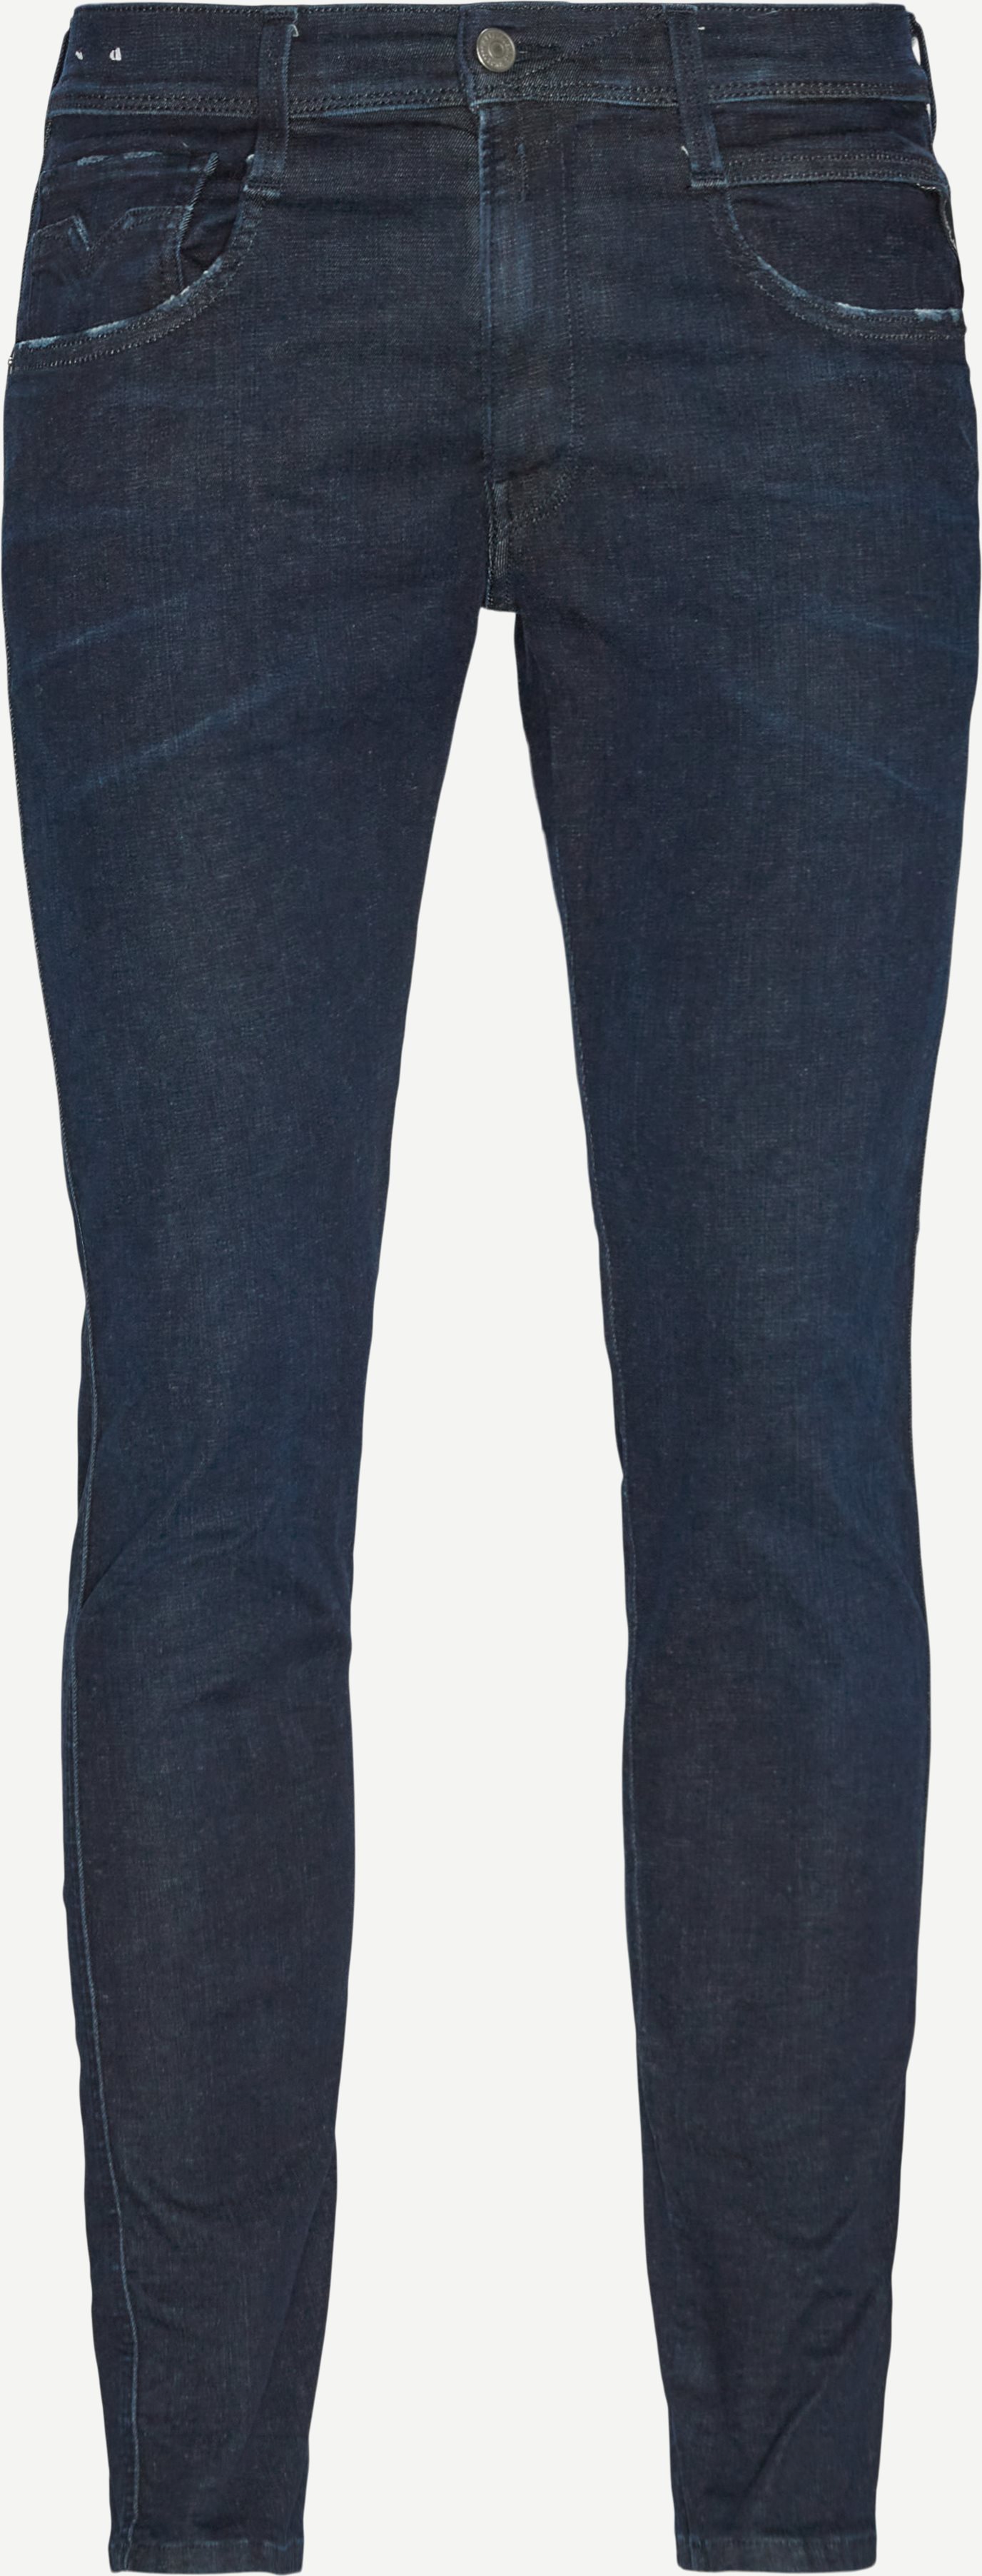 661 E03 Anbass Hyperflex Jeans - Jeans - Slim fit - Denim